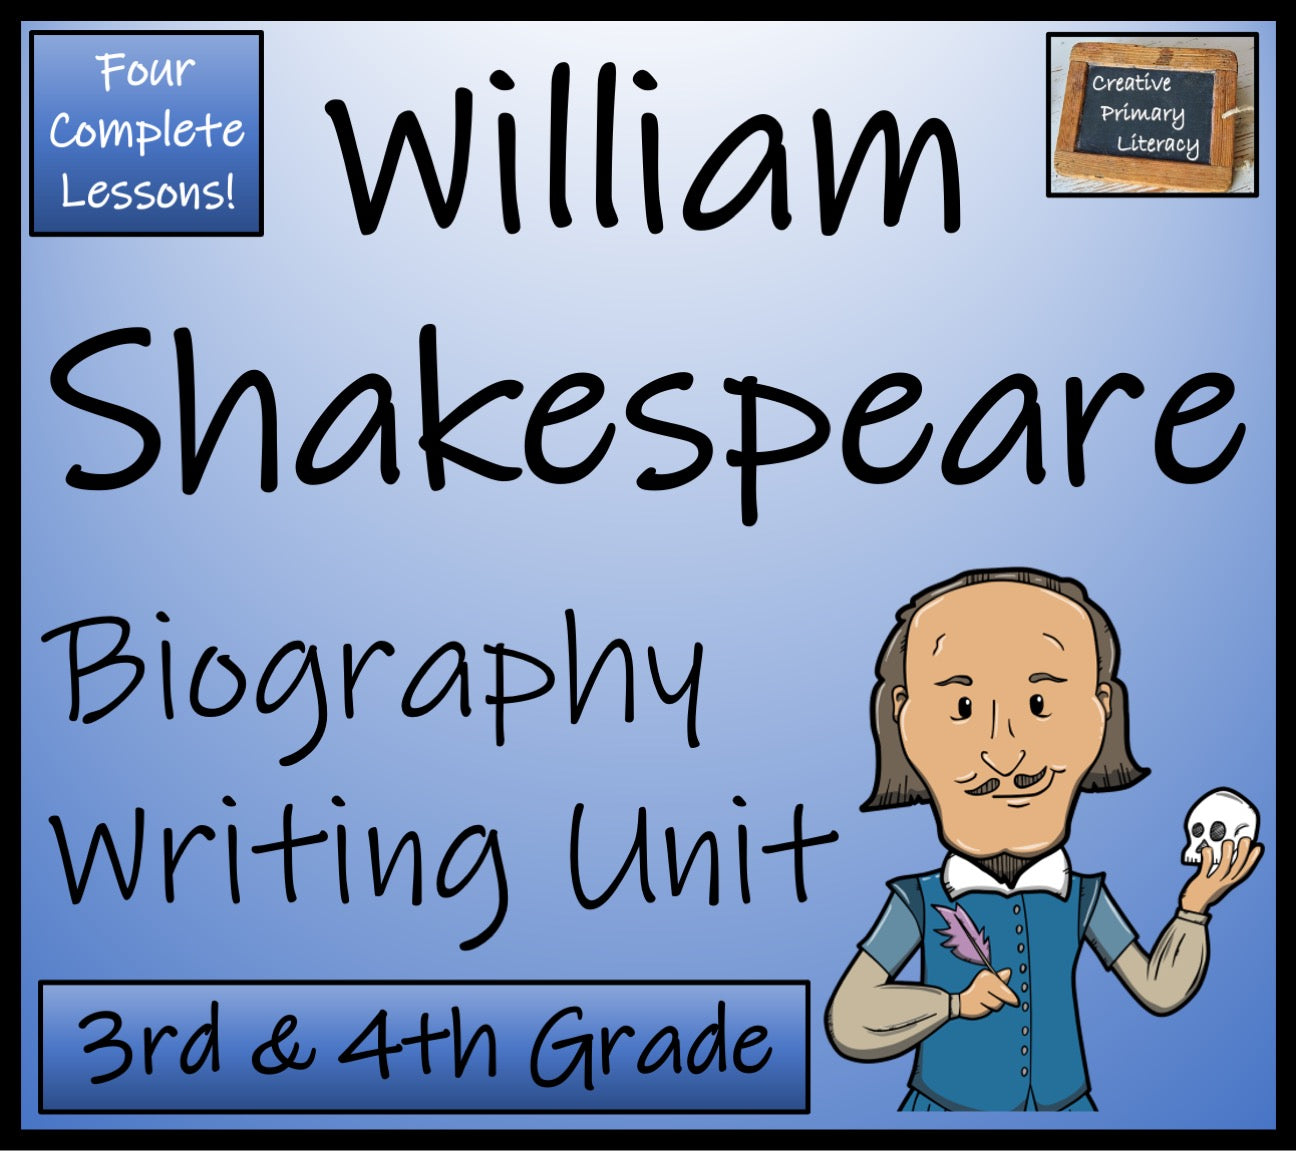 William Shakespeare Biography Writing Unit | 3rd Grade & 4th Grade